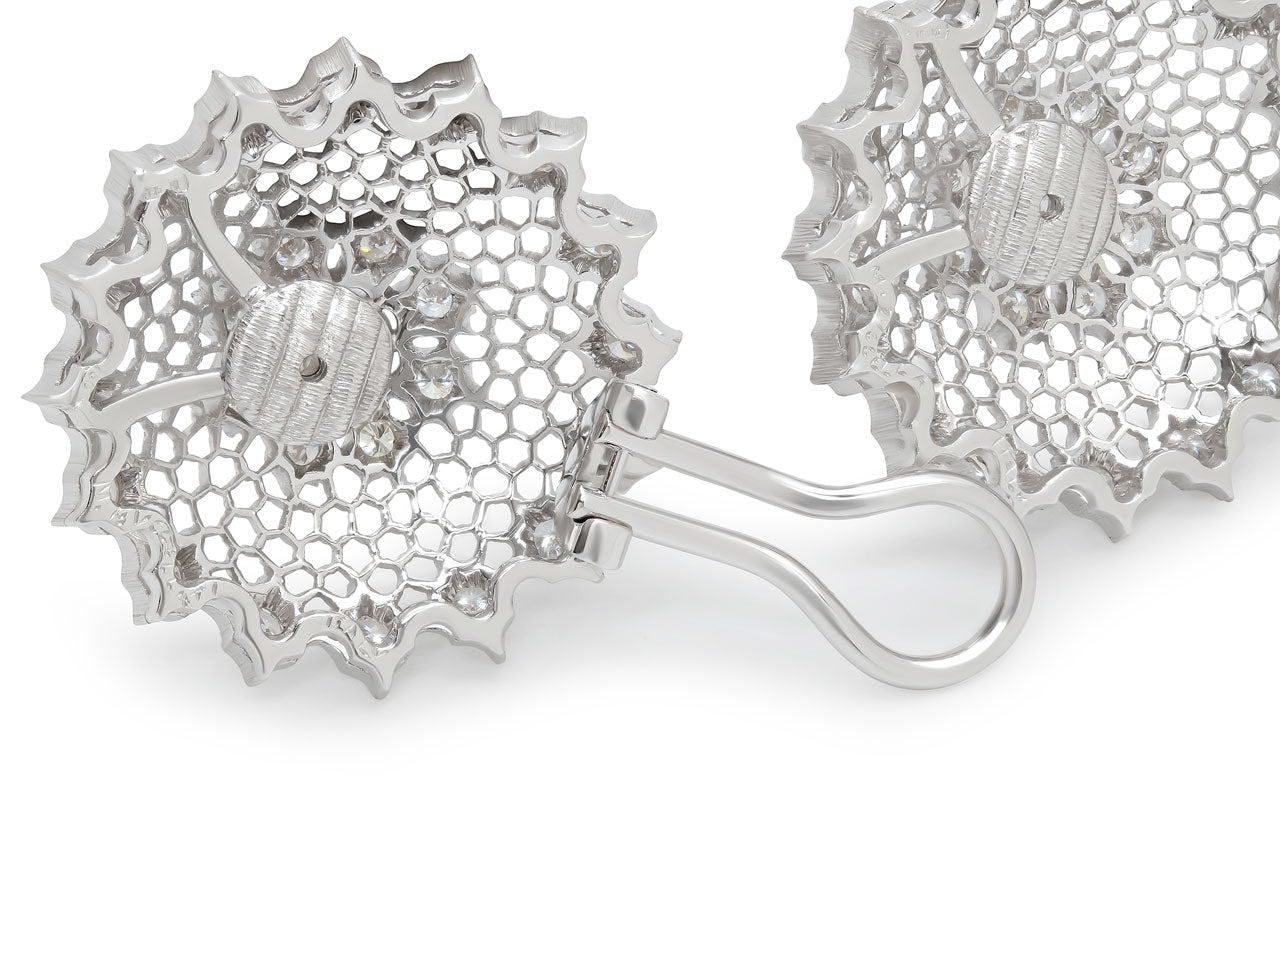 M. Buccellati 'Tulle' Diamond Earrings in 18K White Gold